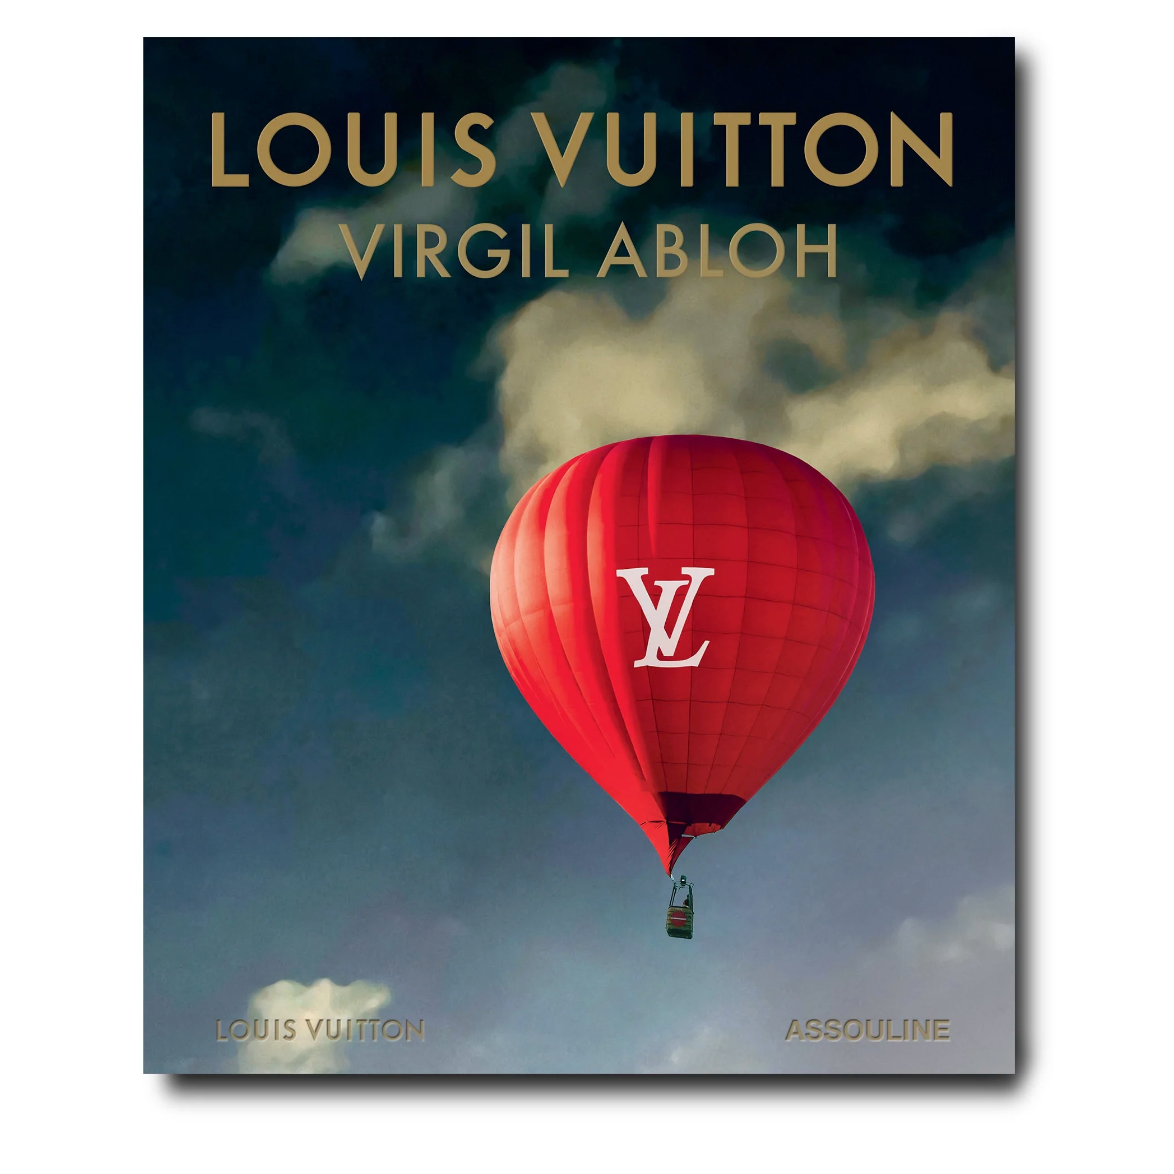 Louis Vuitton NIGO Coffee Cup - Monogram